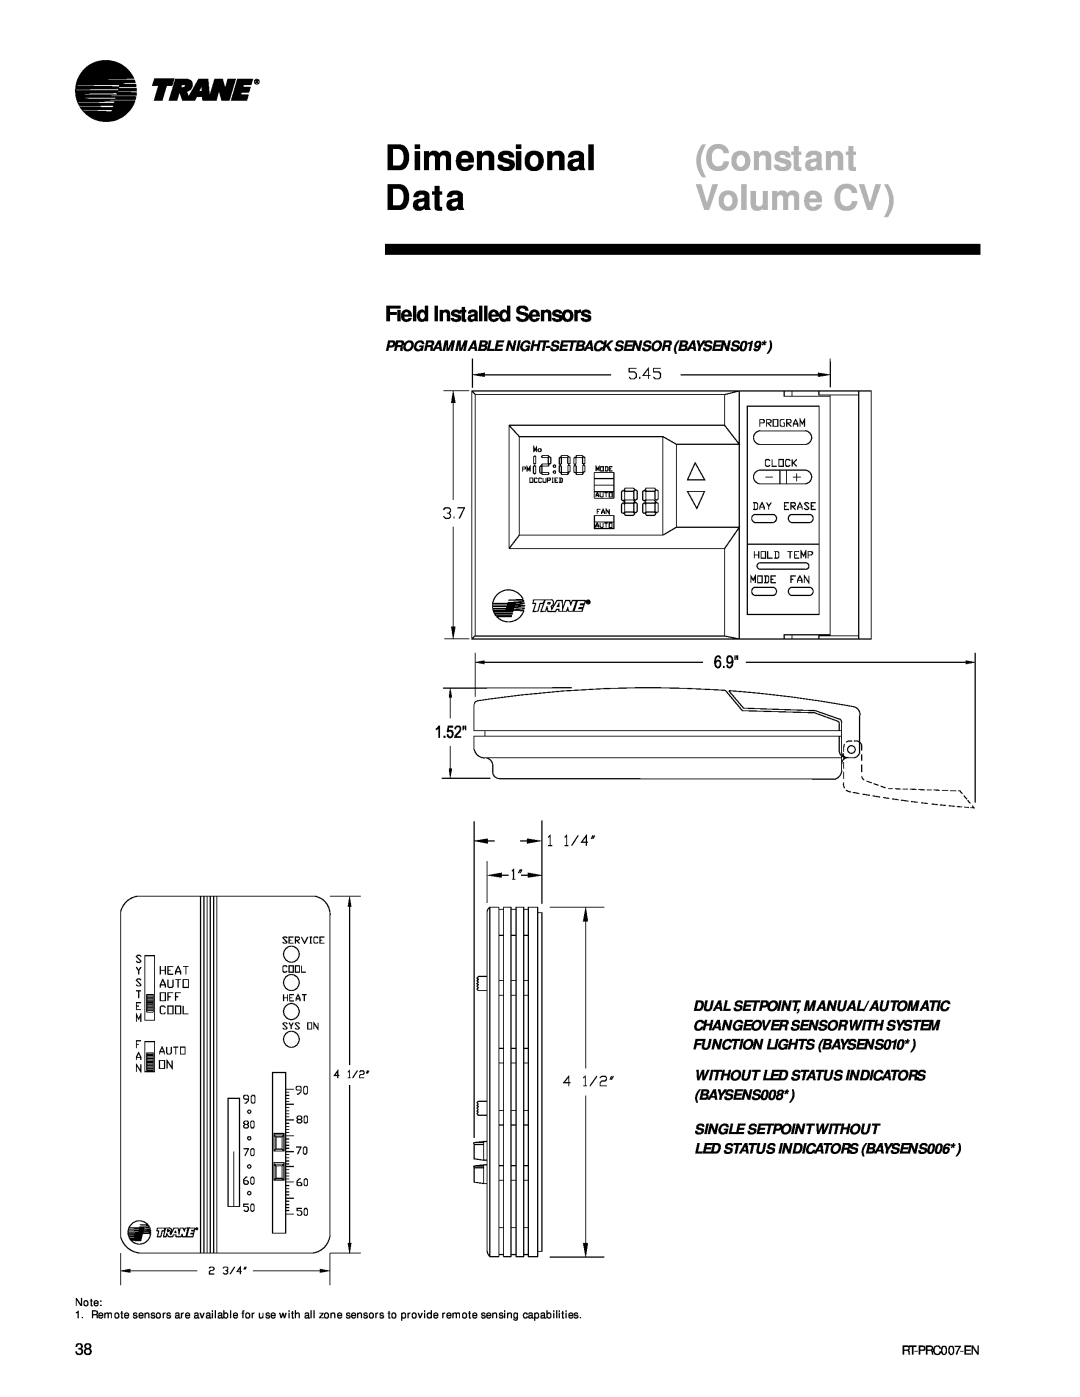 Trane RT-PRC007-EN manual Constant, Volume CV, Dimensional, Data, Field Installed Sensors, Dual Setpoint, Manual/Automatic 